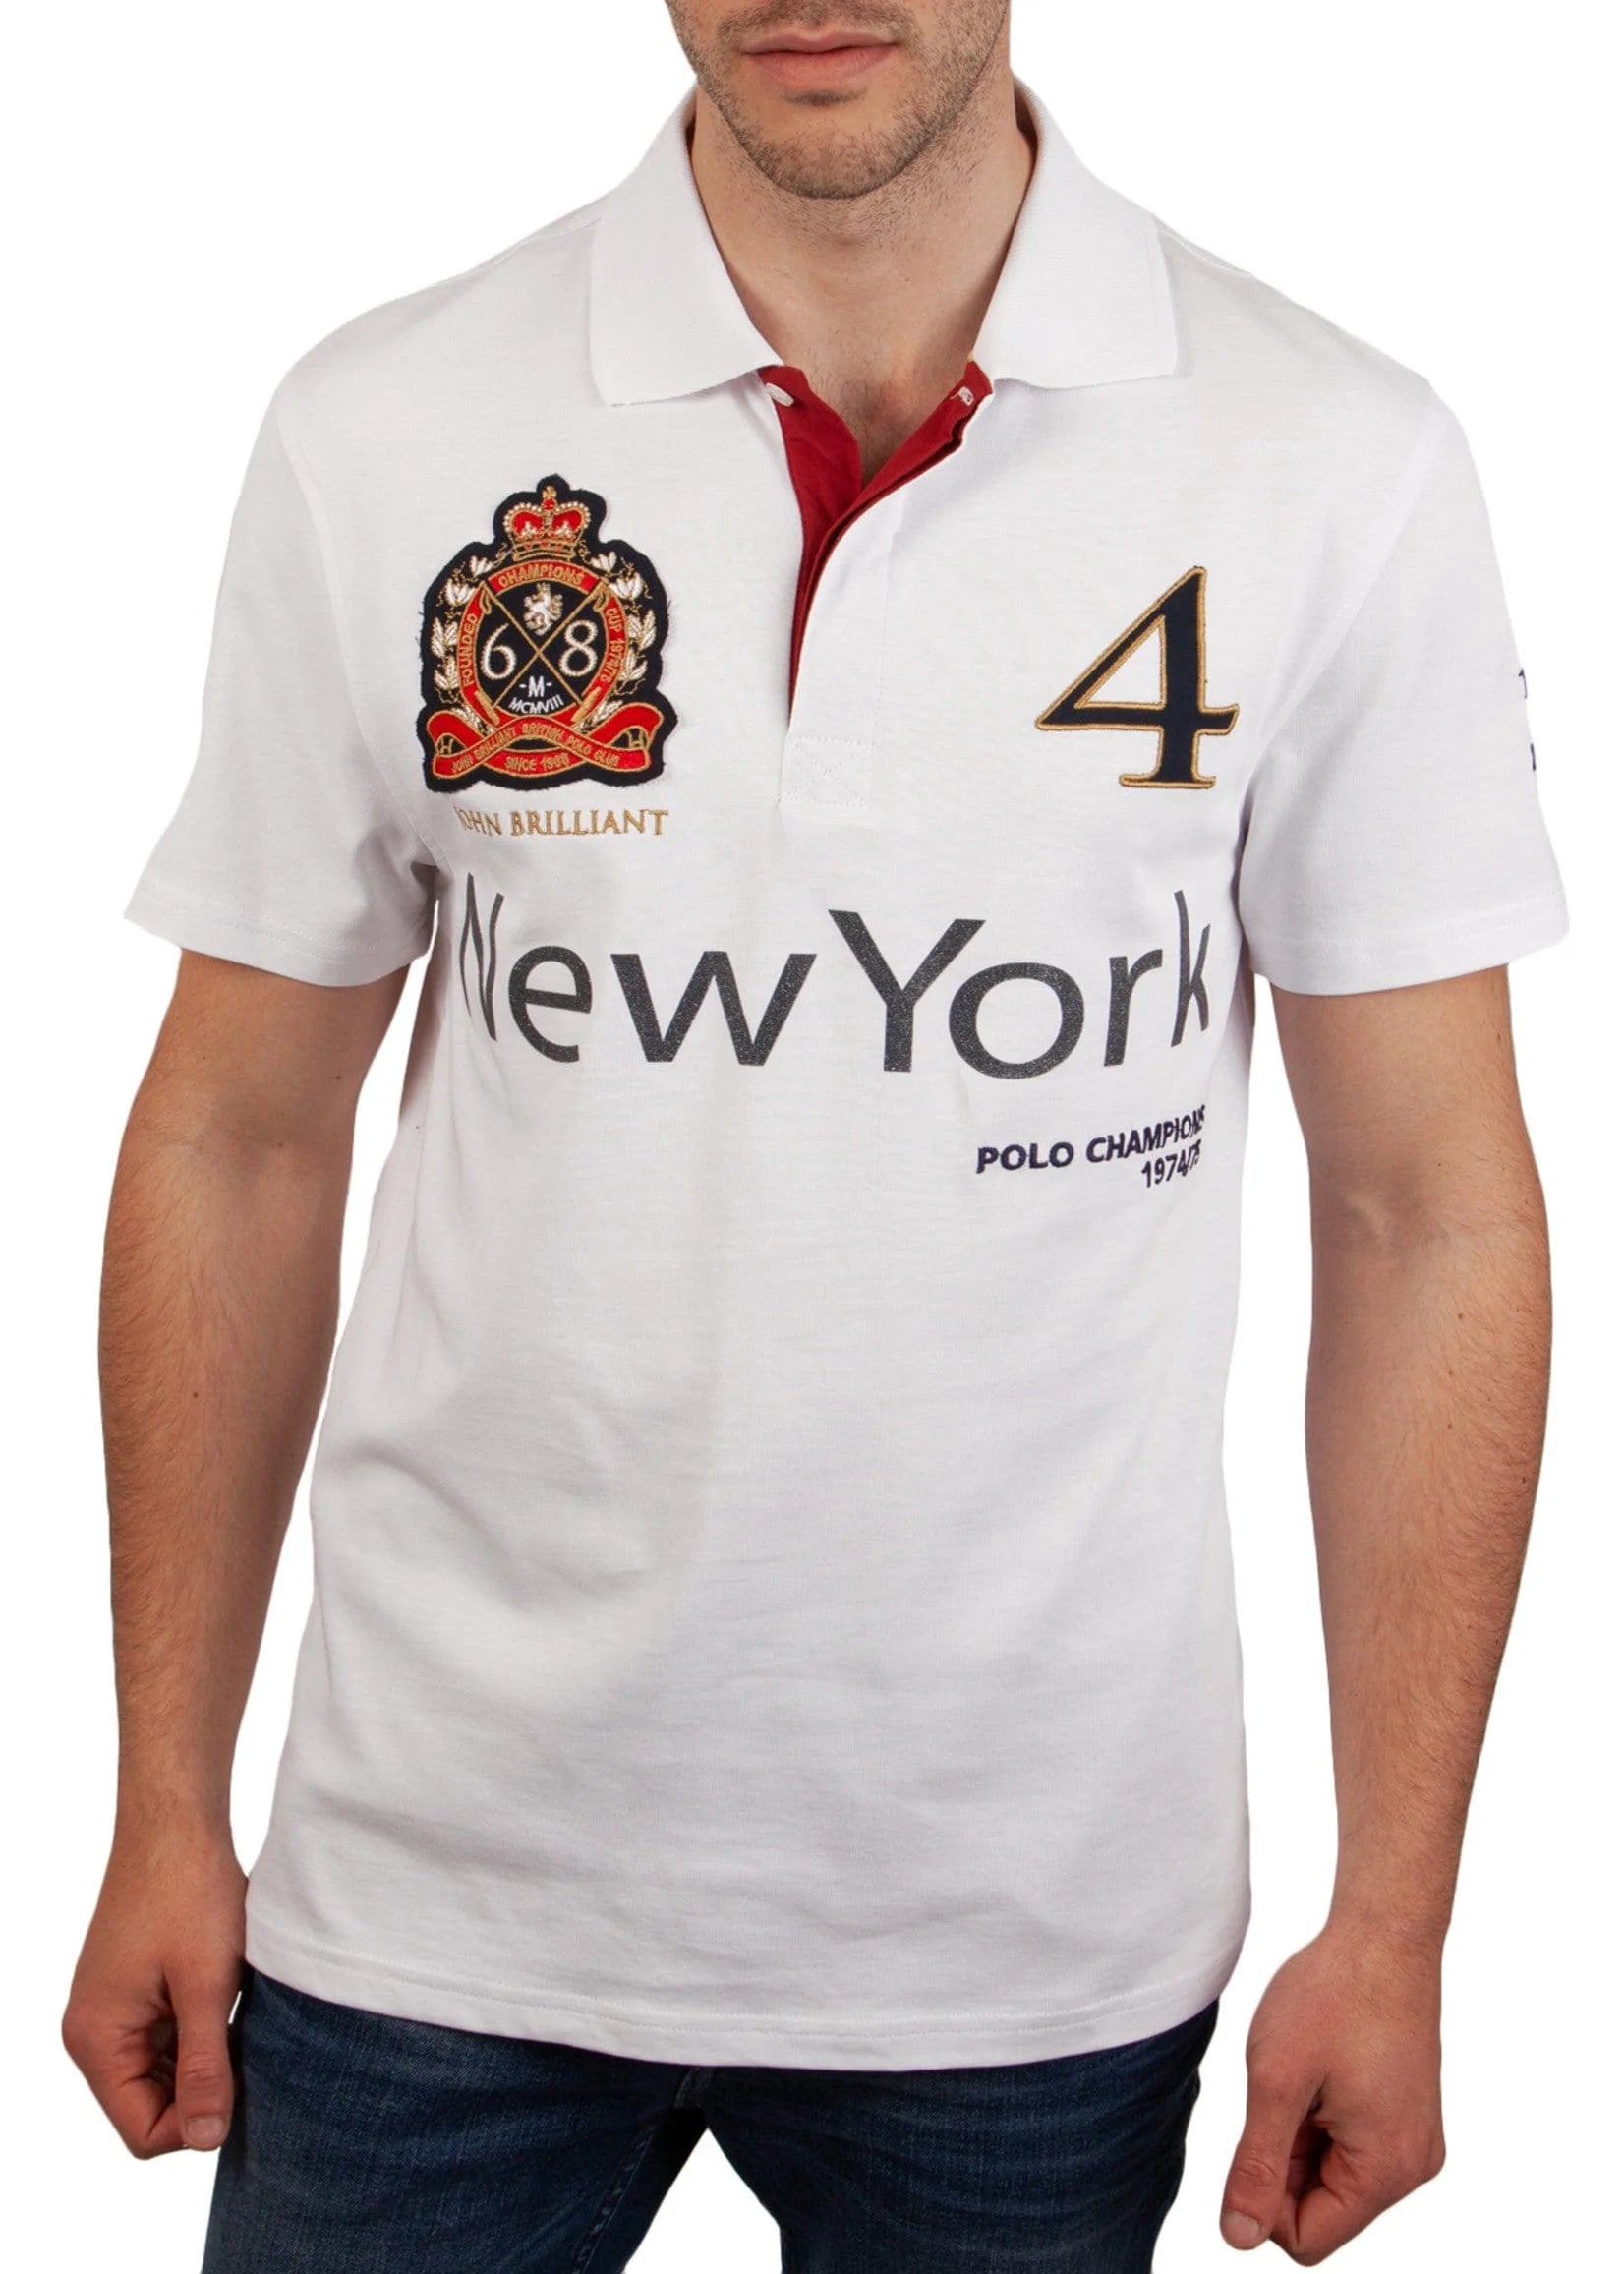 John Brilliant Polo Shirt New York, white - Stateshop Fashion